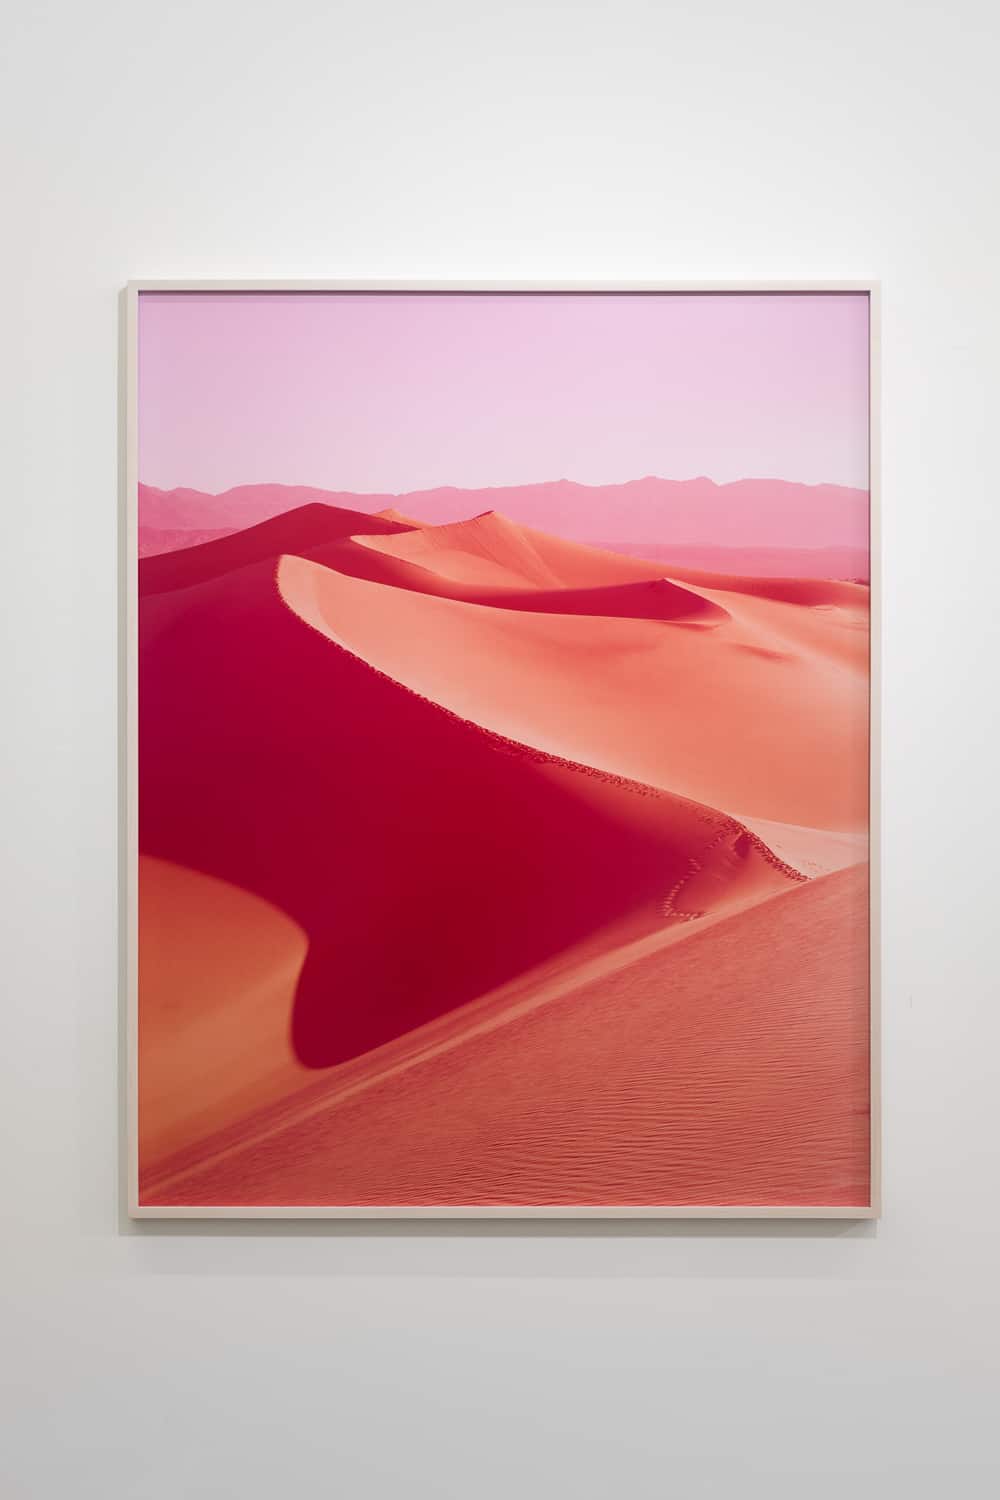 David Benjamin Sherry, Sunrise on Mesquite Flat Dunes, Death Valley California, 2013, c-type print, framed